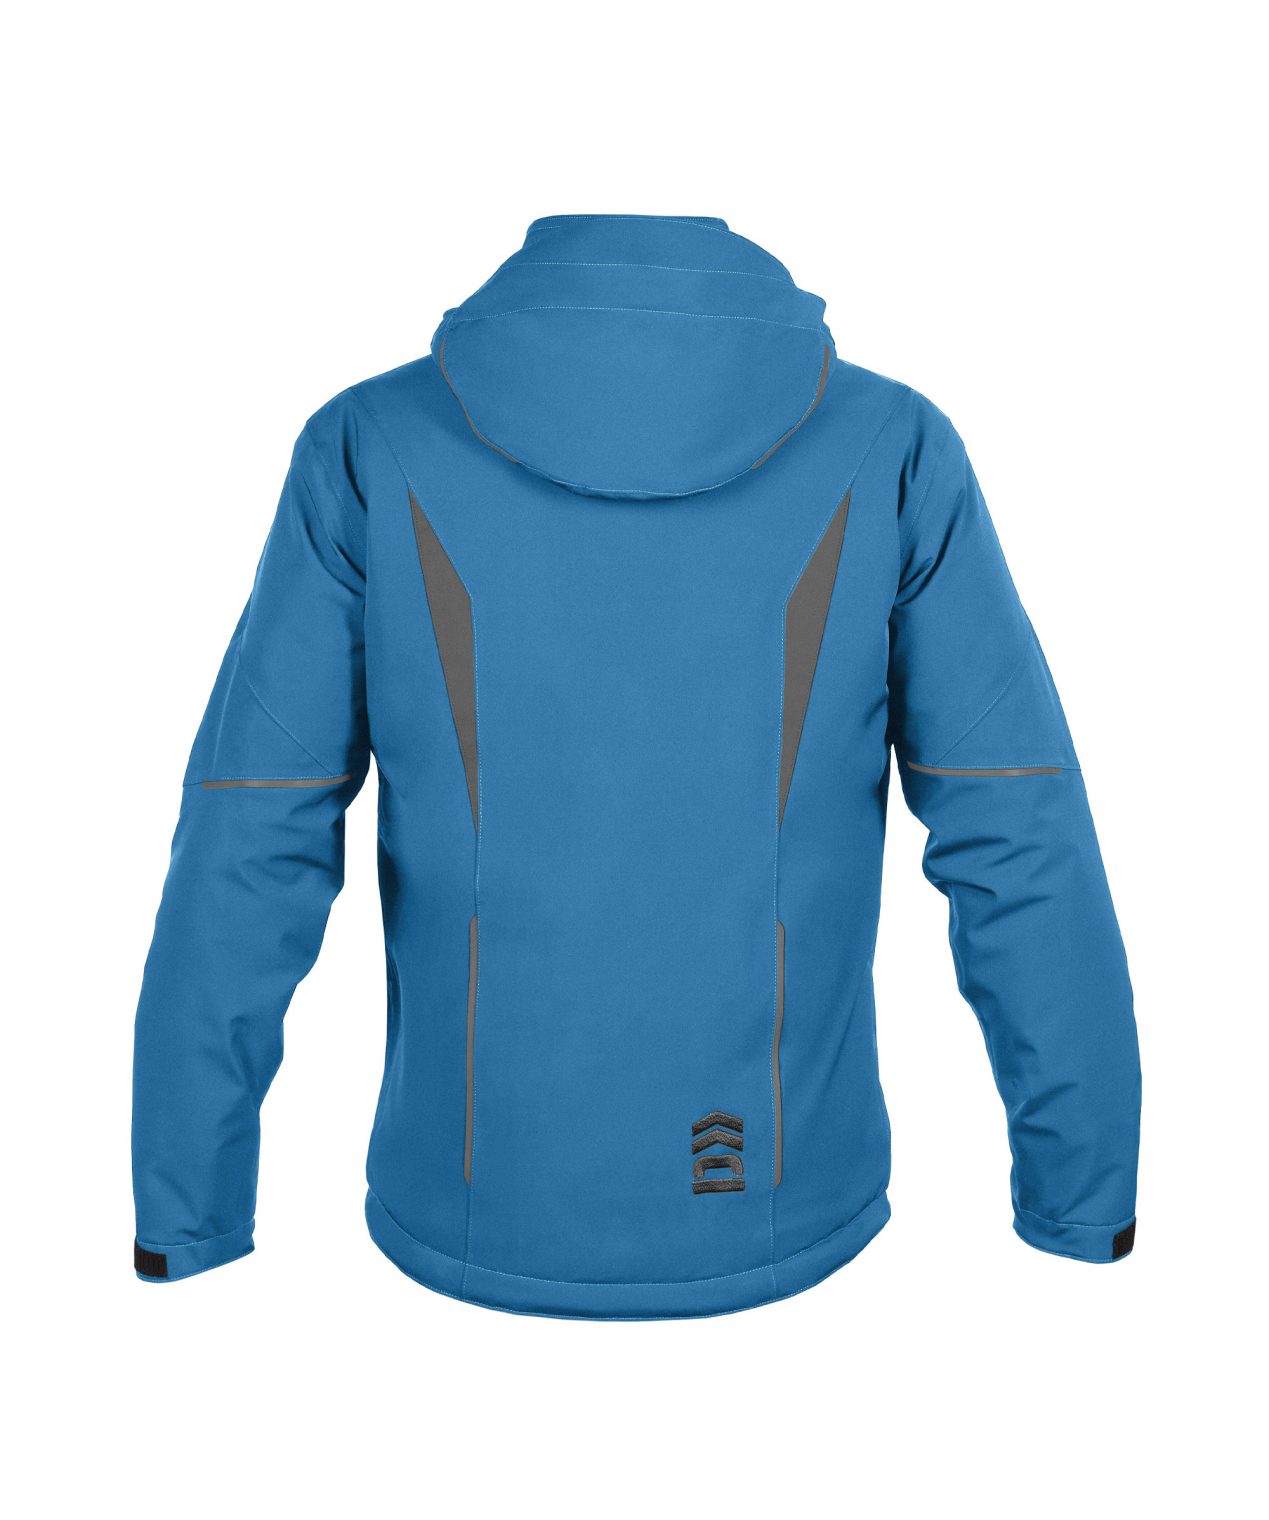 nordix stretch winter jacket azure blue back